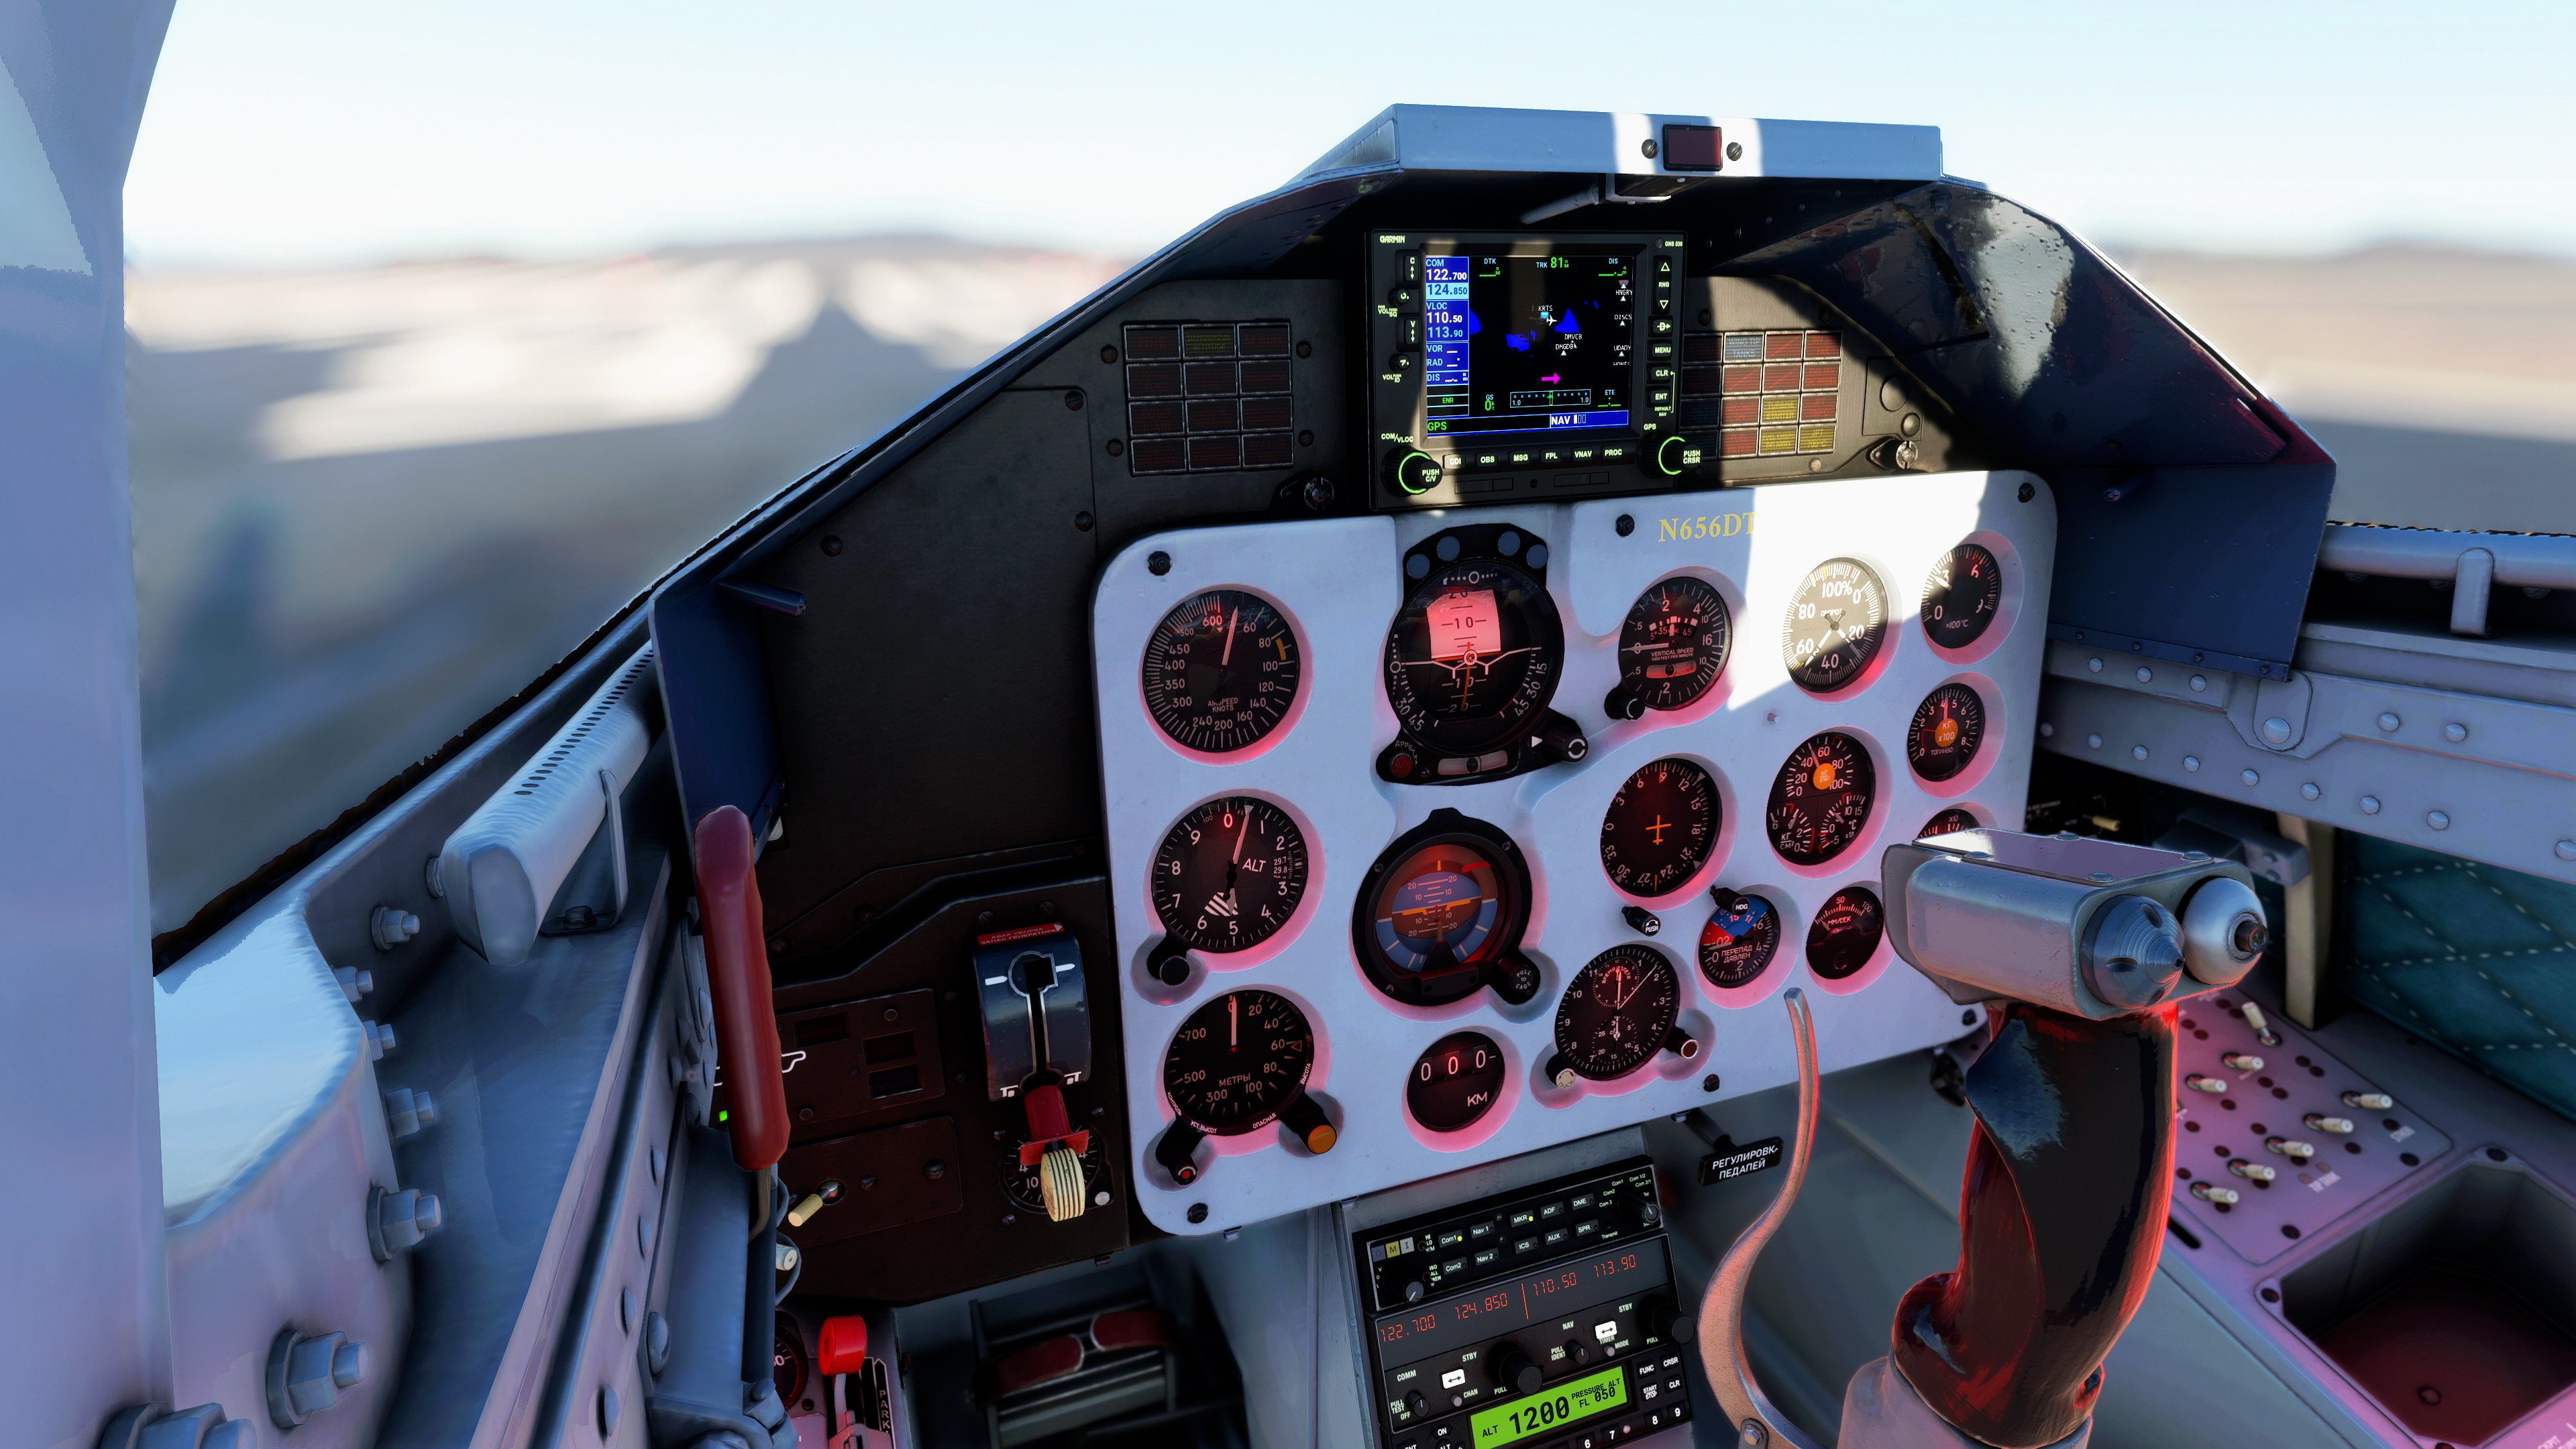 Microsoft Flight Simulator - Reno Air Races Expansion Pack